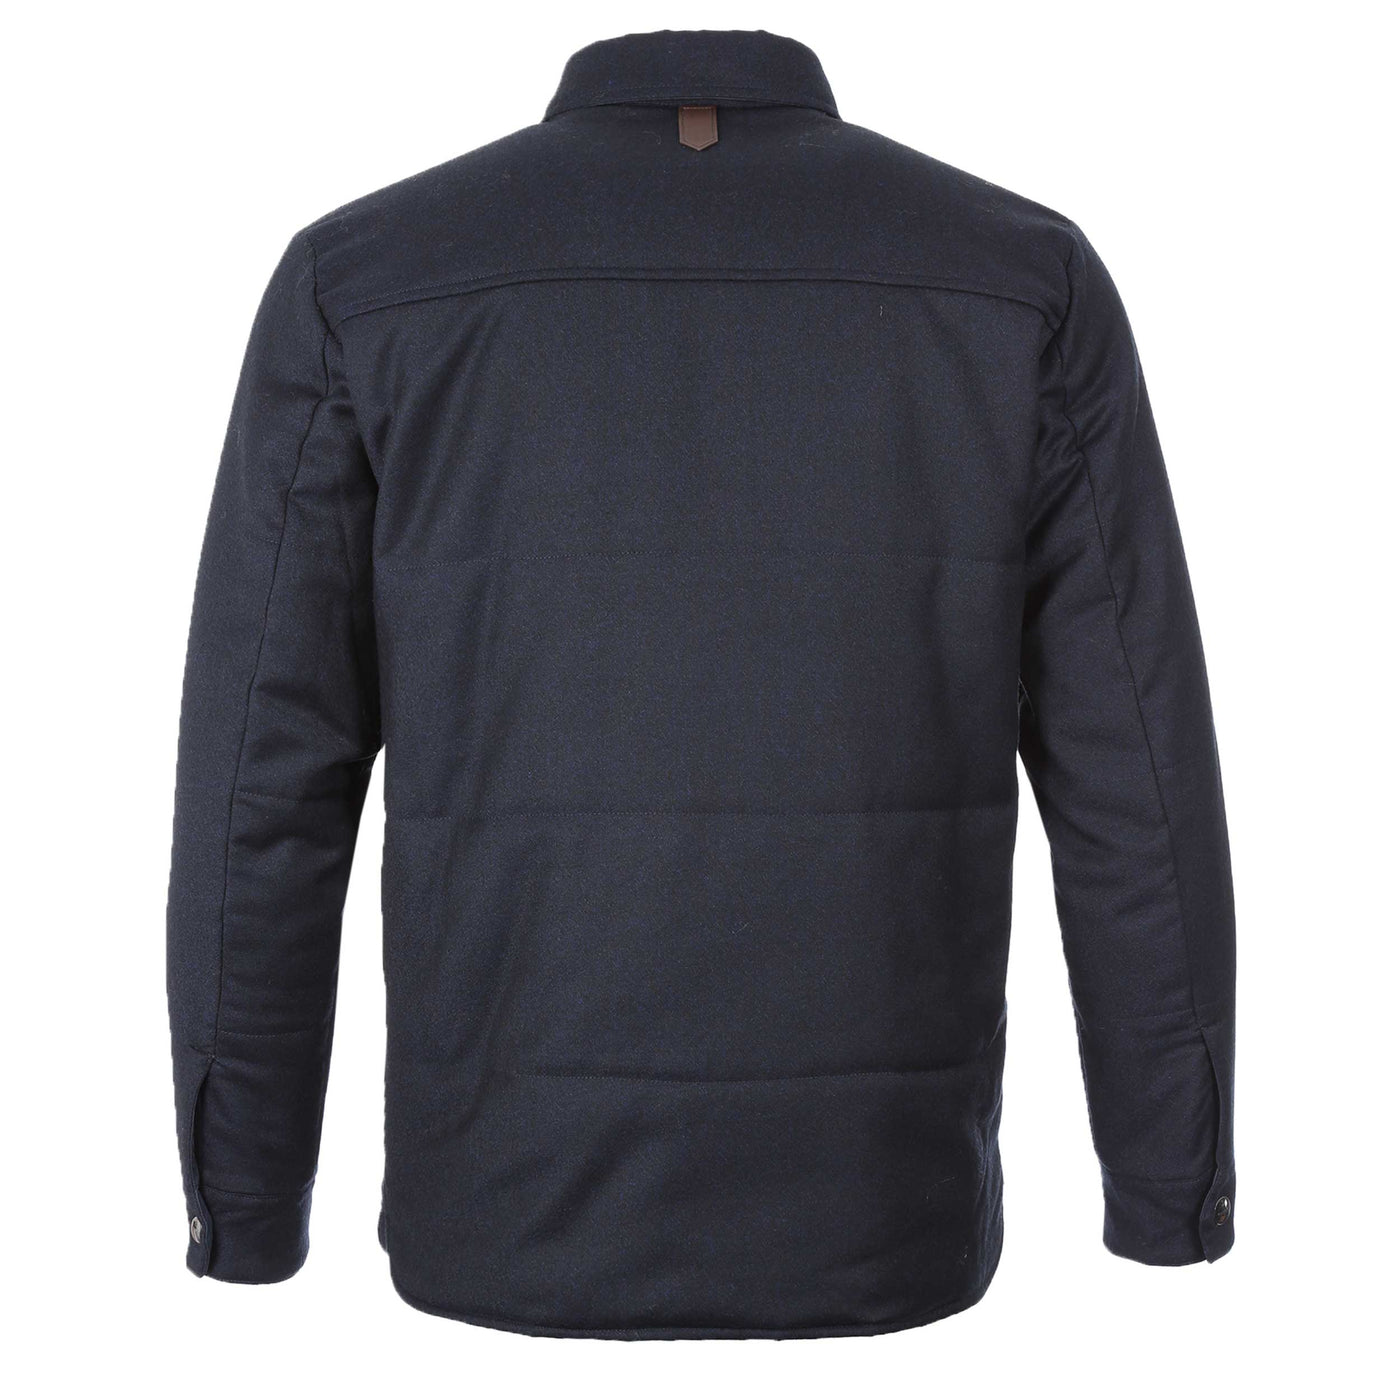 Canali Wool Flannel Jacket in Navy Back